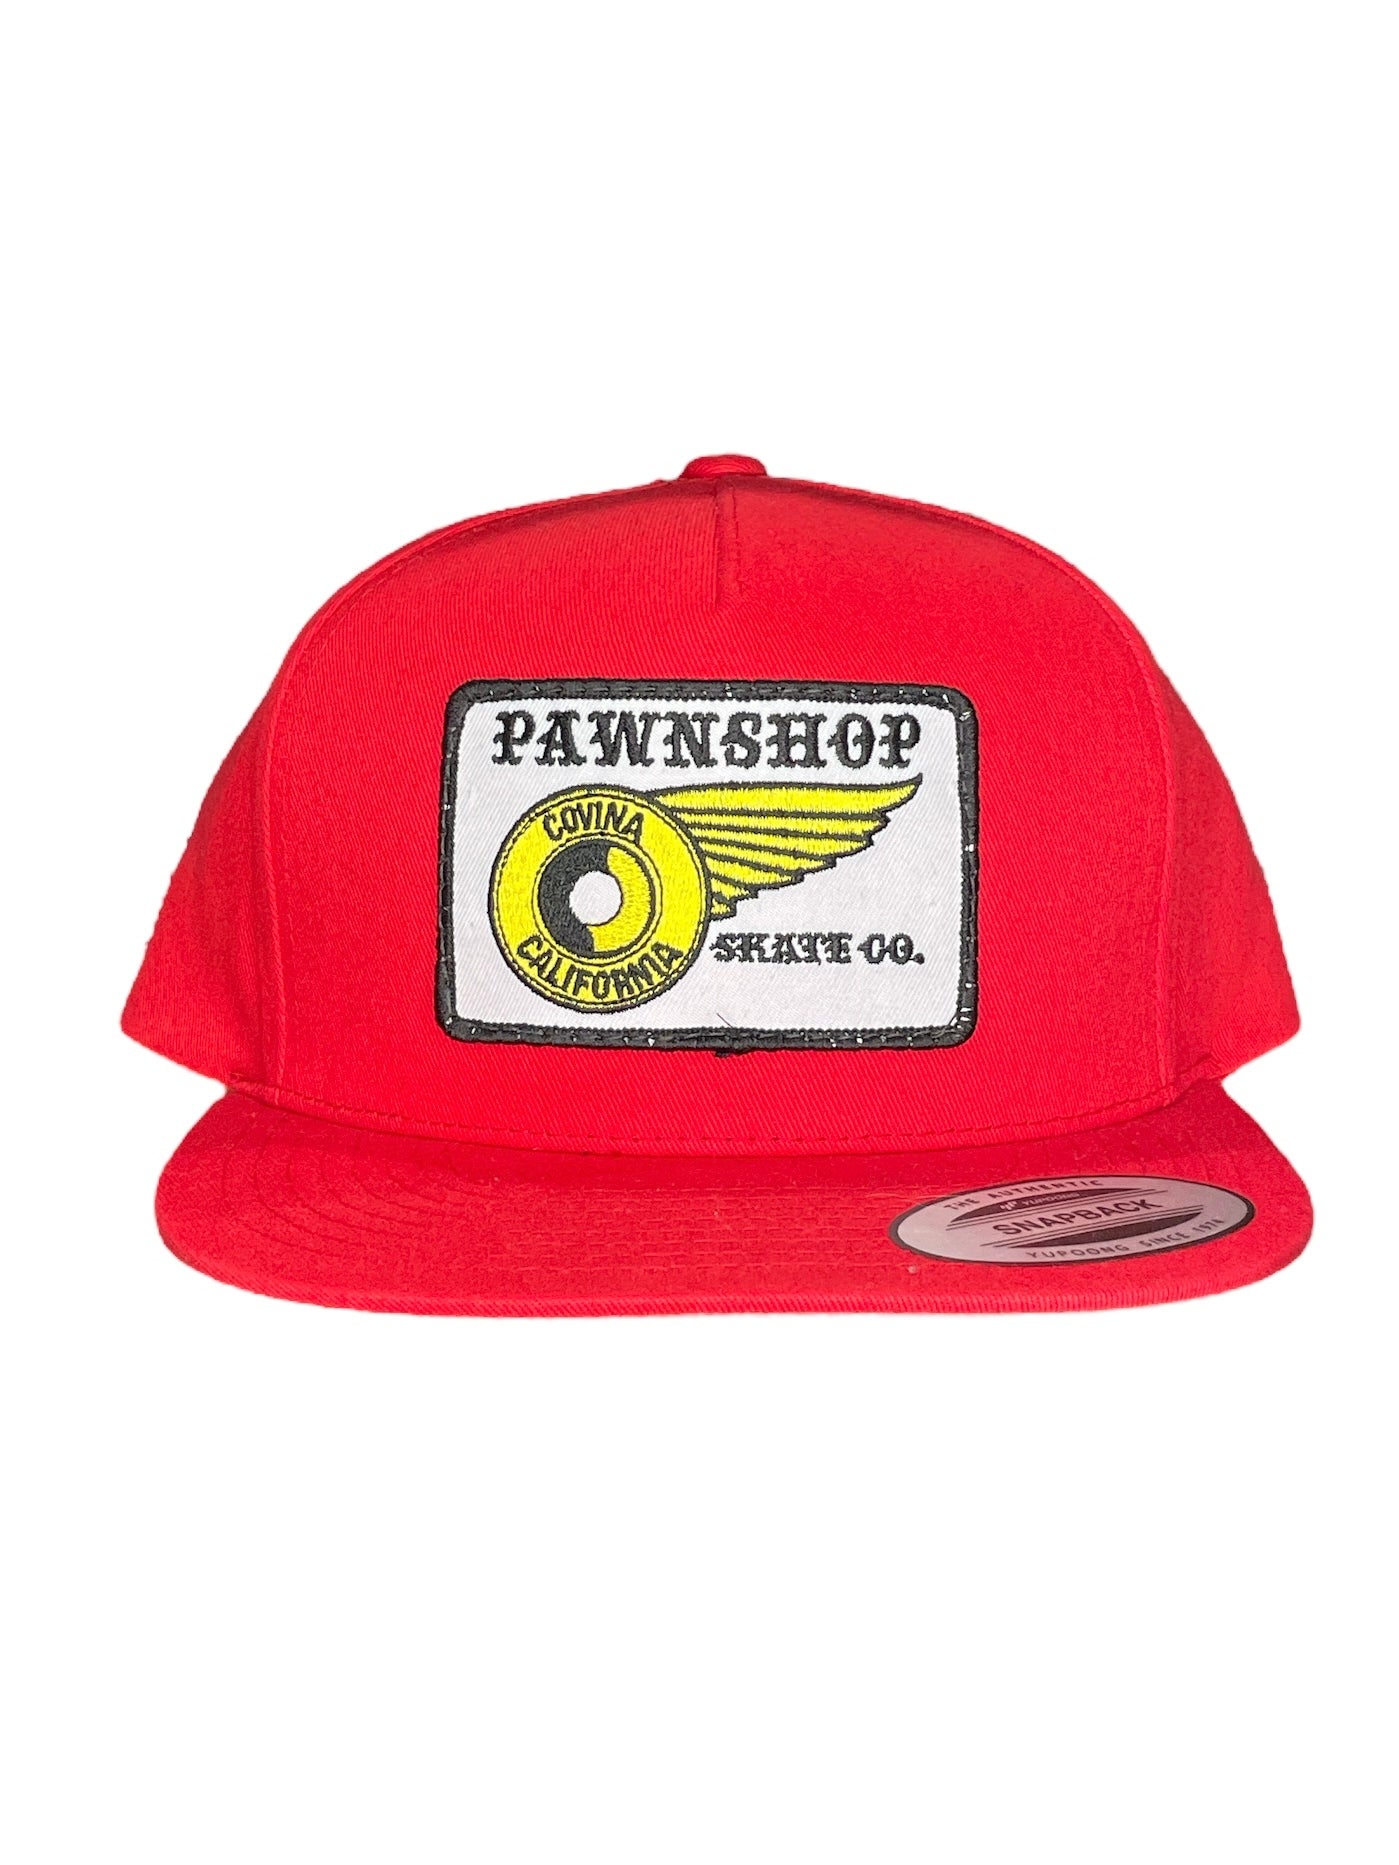 Pawnshop classic SnapBack hat OG red